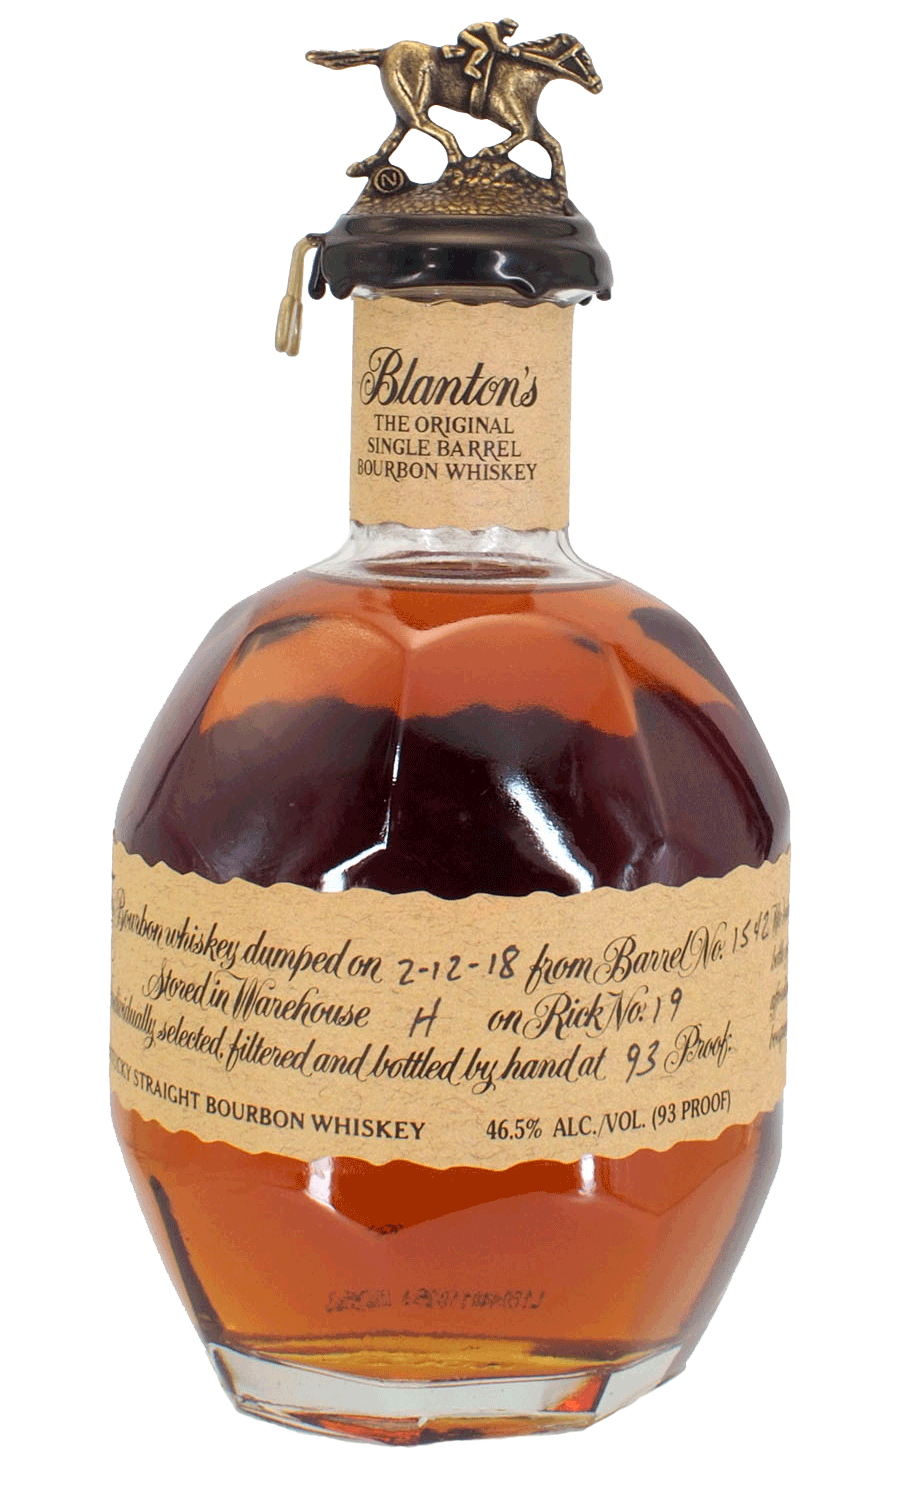 Blanton Bourbon Whiskey The Original Single Barrel